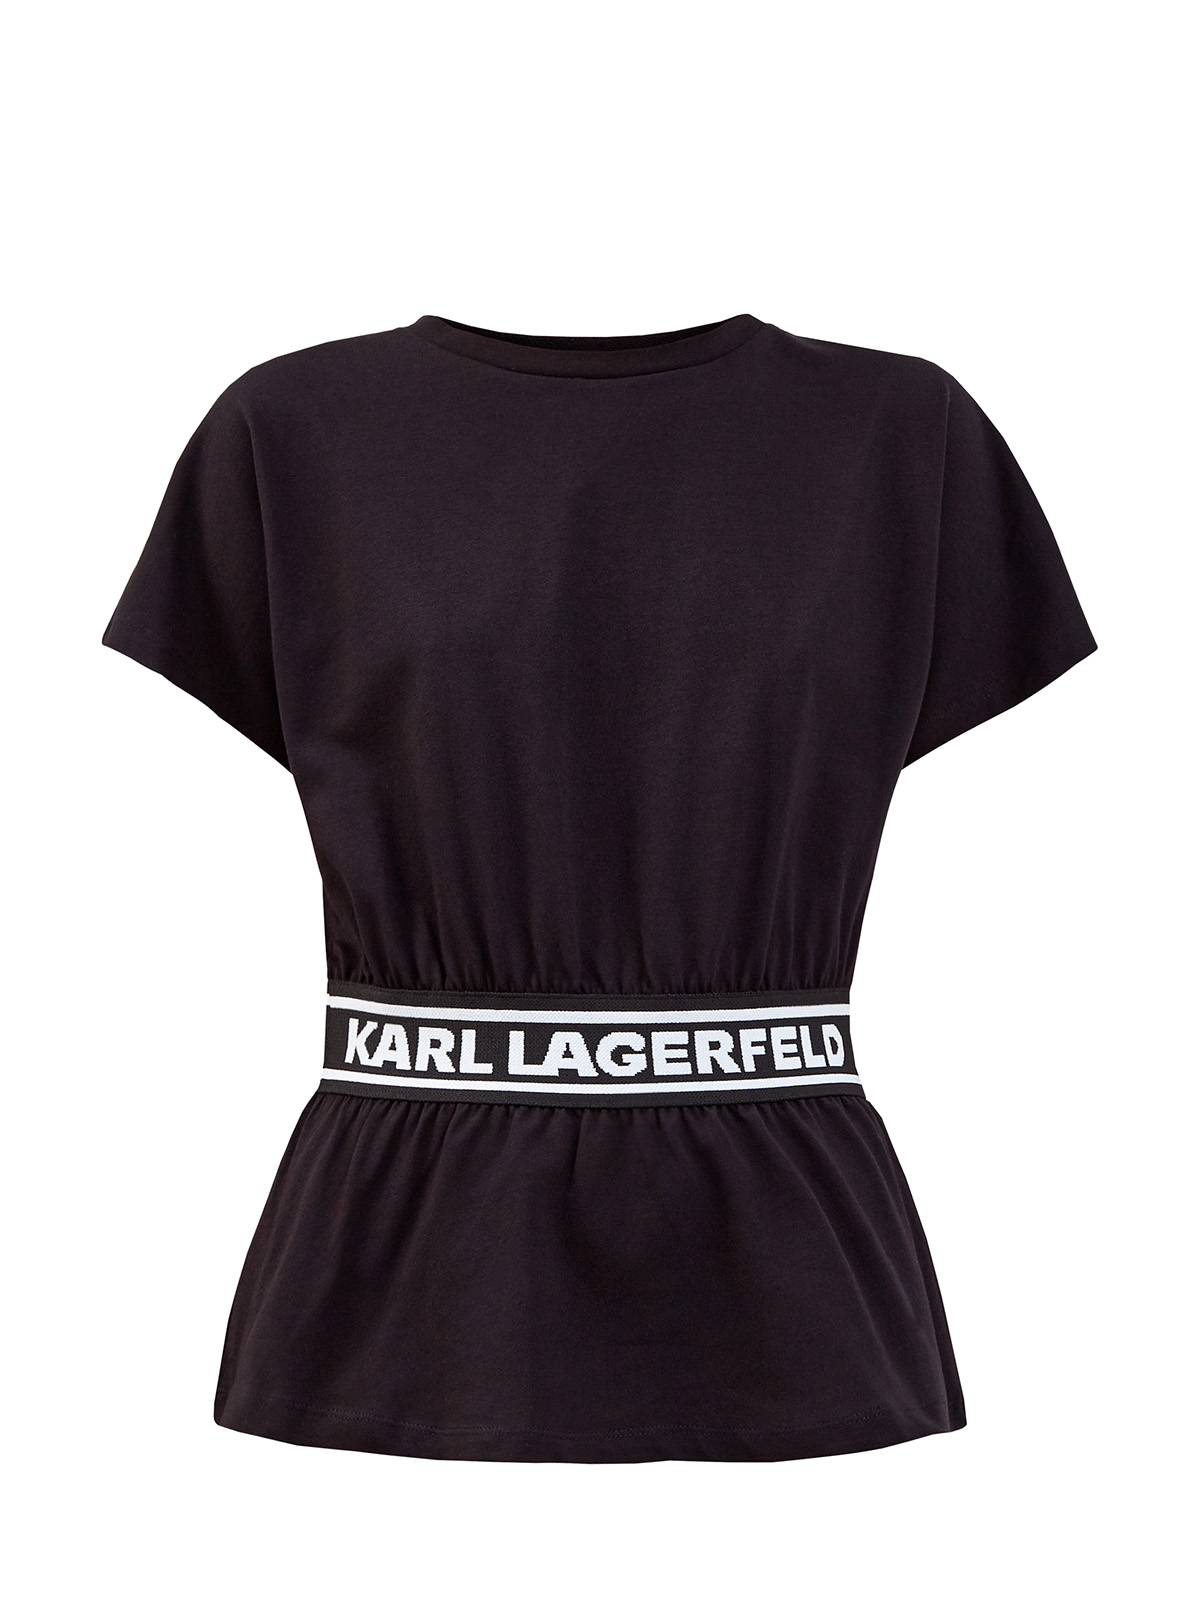 Приталенная футболка из хлопкового джерси KARL LAGERFELD, цвет черный, размер S;M;XL;XS - фото 1